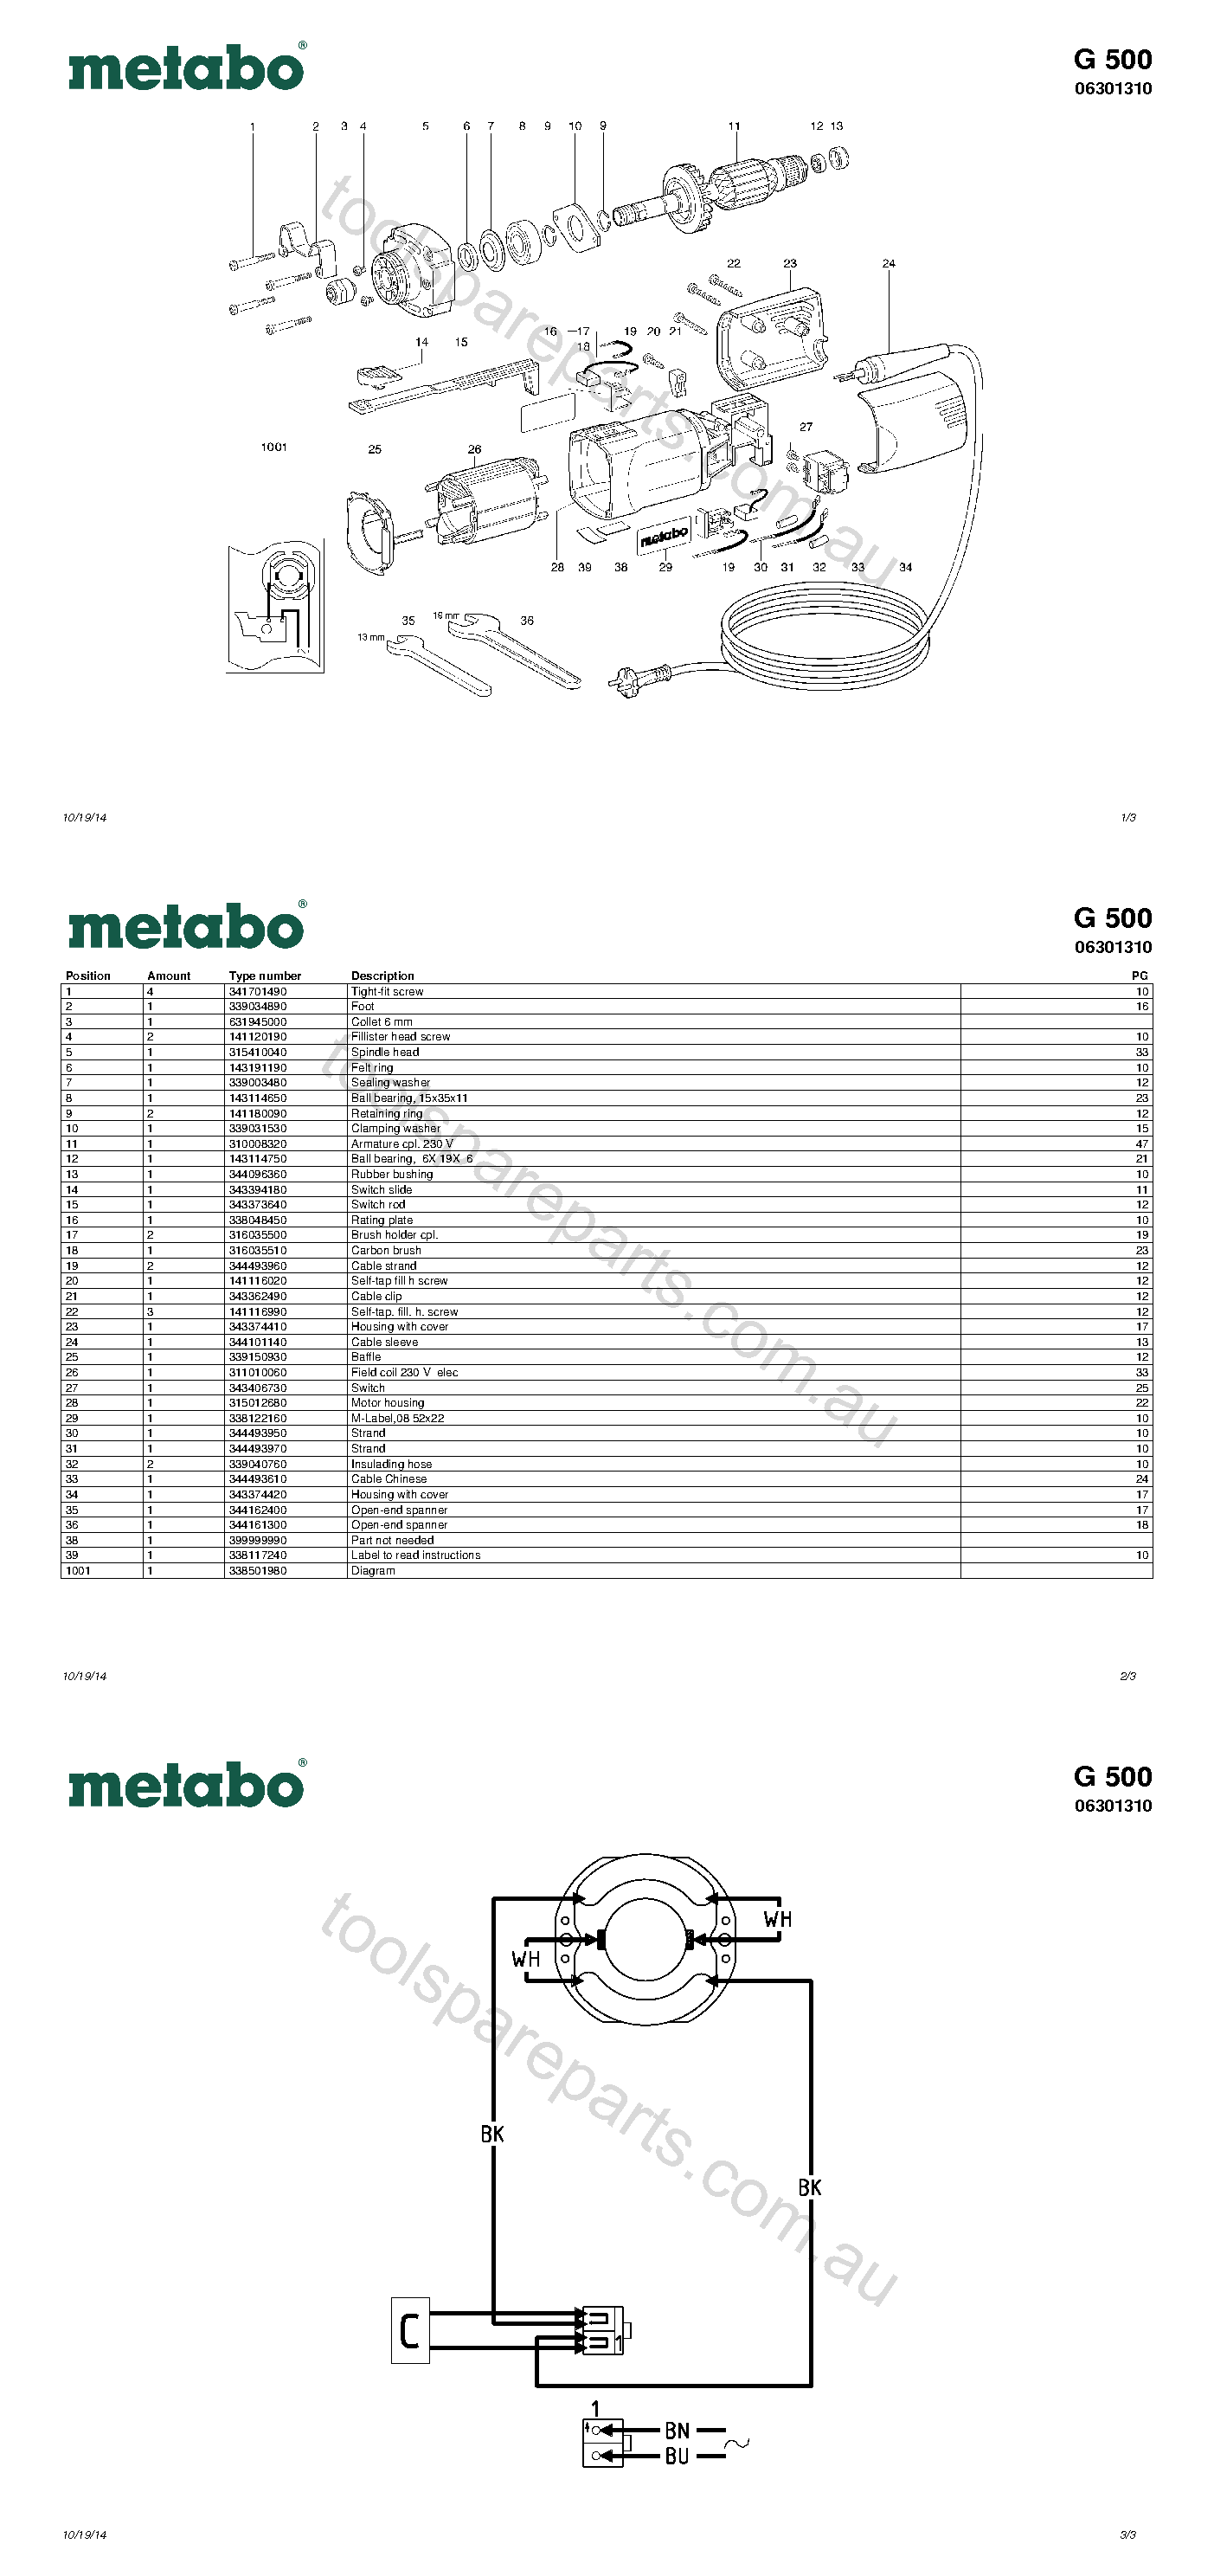 Metabo G 500 06301310  Diagram 1